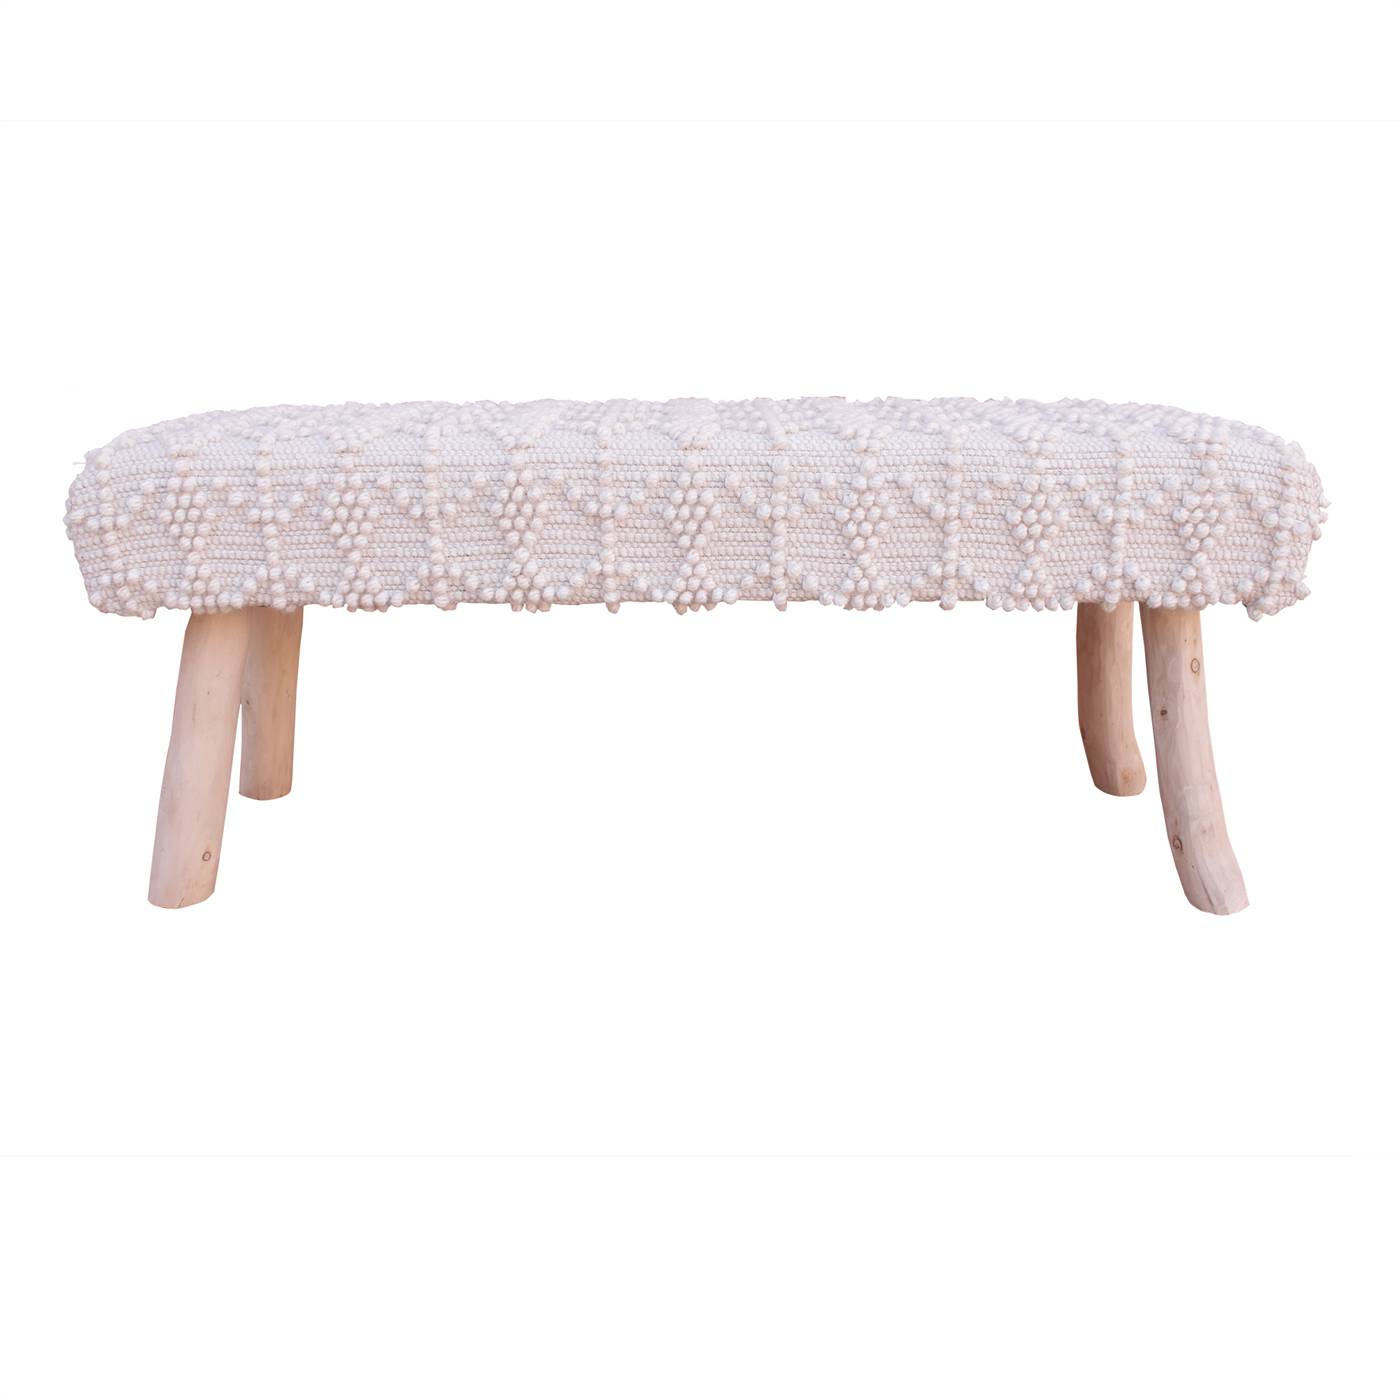 Leeward Bench, 120x40x50 cm, Natural, Natural White, Jute, Wool, Hand Woven, Pitloom, All Loop